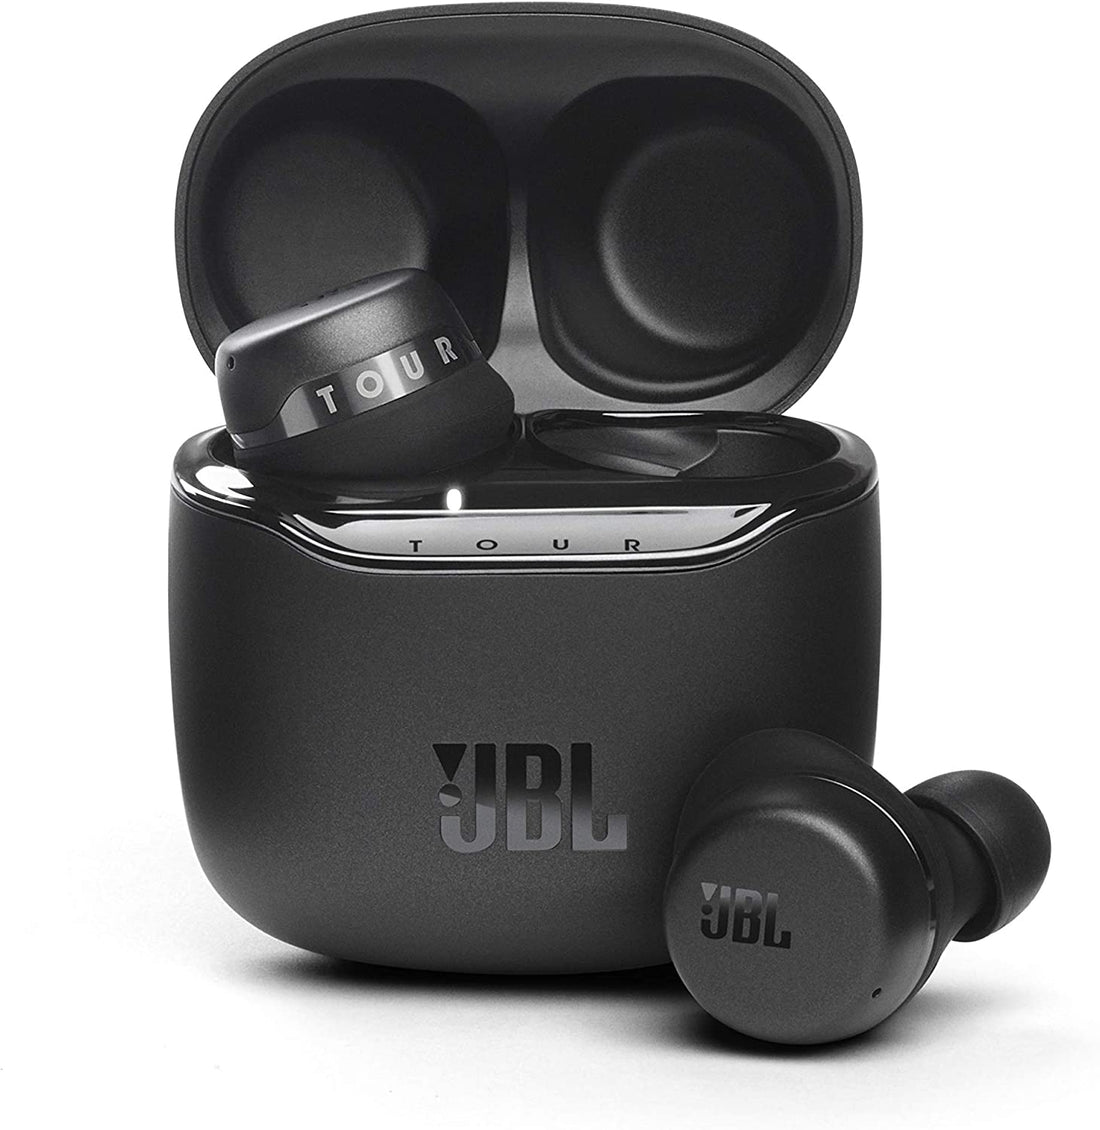 JBL Tour PRO+ TWS True Wireless Bluetooth Earbuds with Built-in Alexa - Black (Certified Refurbished)